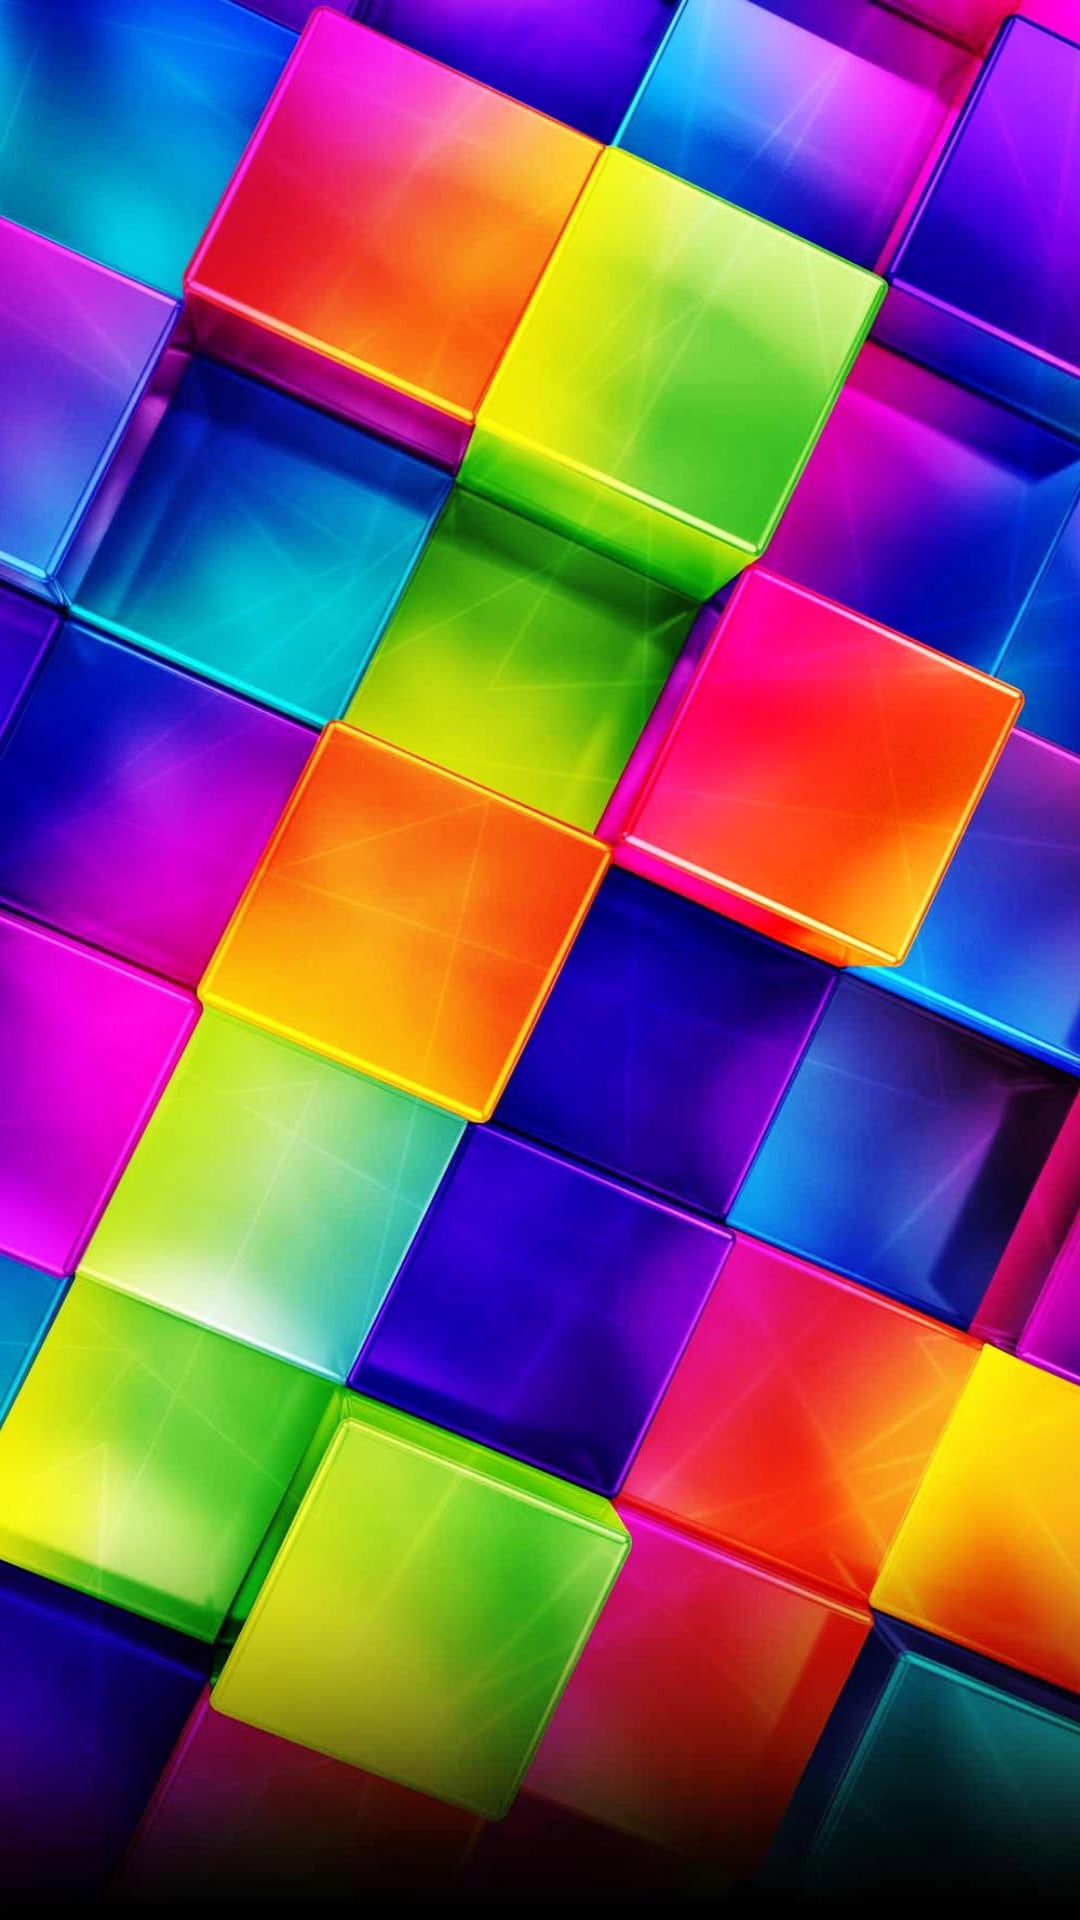 3D Colorful Geometric, multicolored blocks digital wallpaper